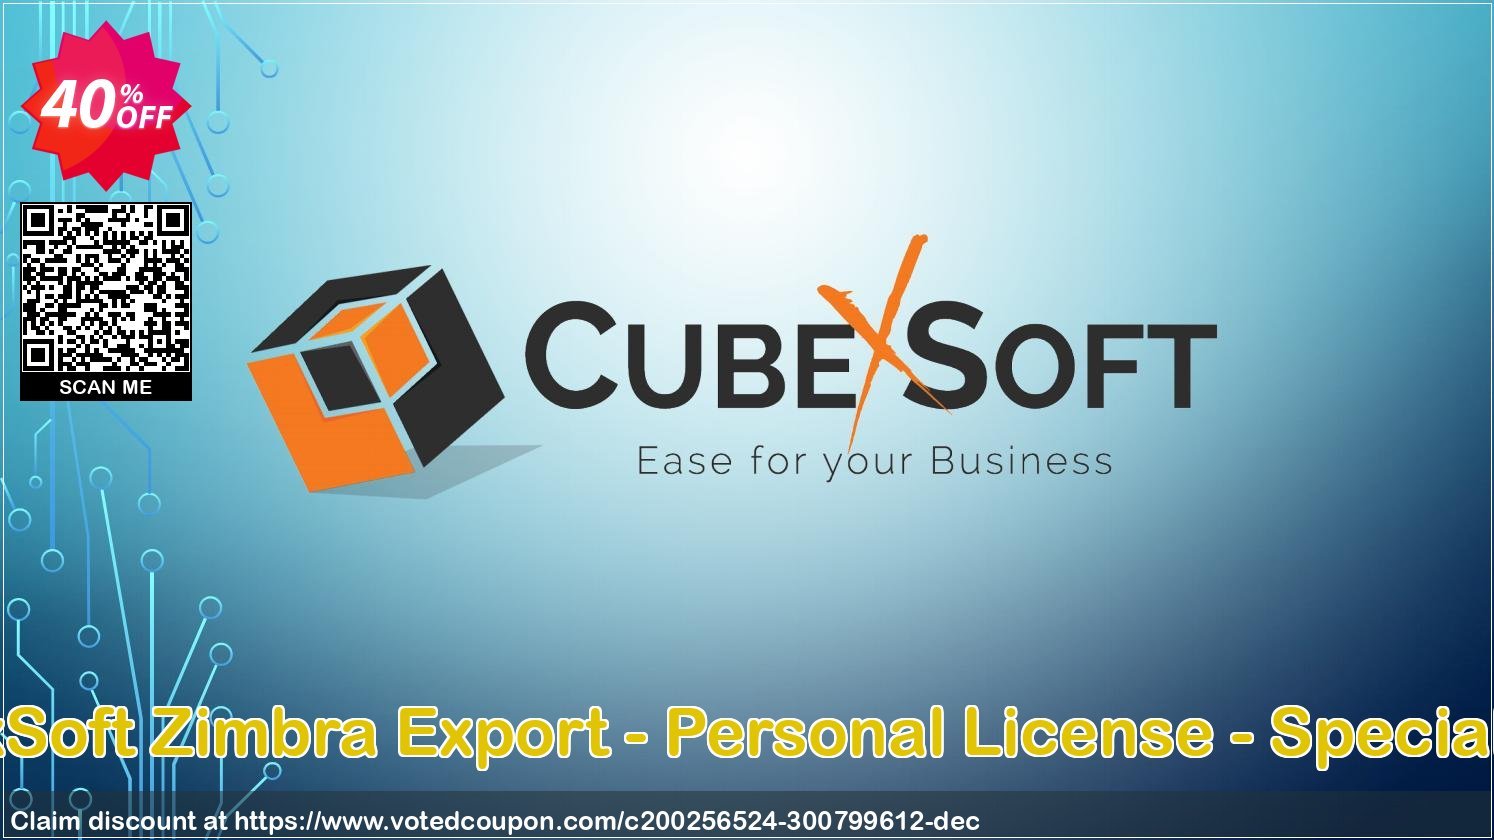 CubexSoft Zimbra Export - Personal Plan - Special Offer Coupon, discount Coupon code CubexSoft Zimbra Export - Personal License - Special Offer. Promotion: CubexSoft Zimbra Export - Personal License - Special Offer offer from CubexSoft Tools Pvt. Ltd.